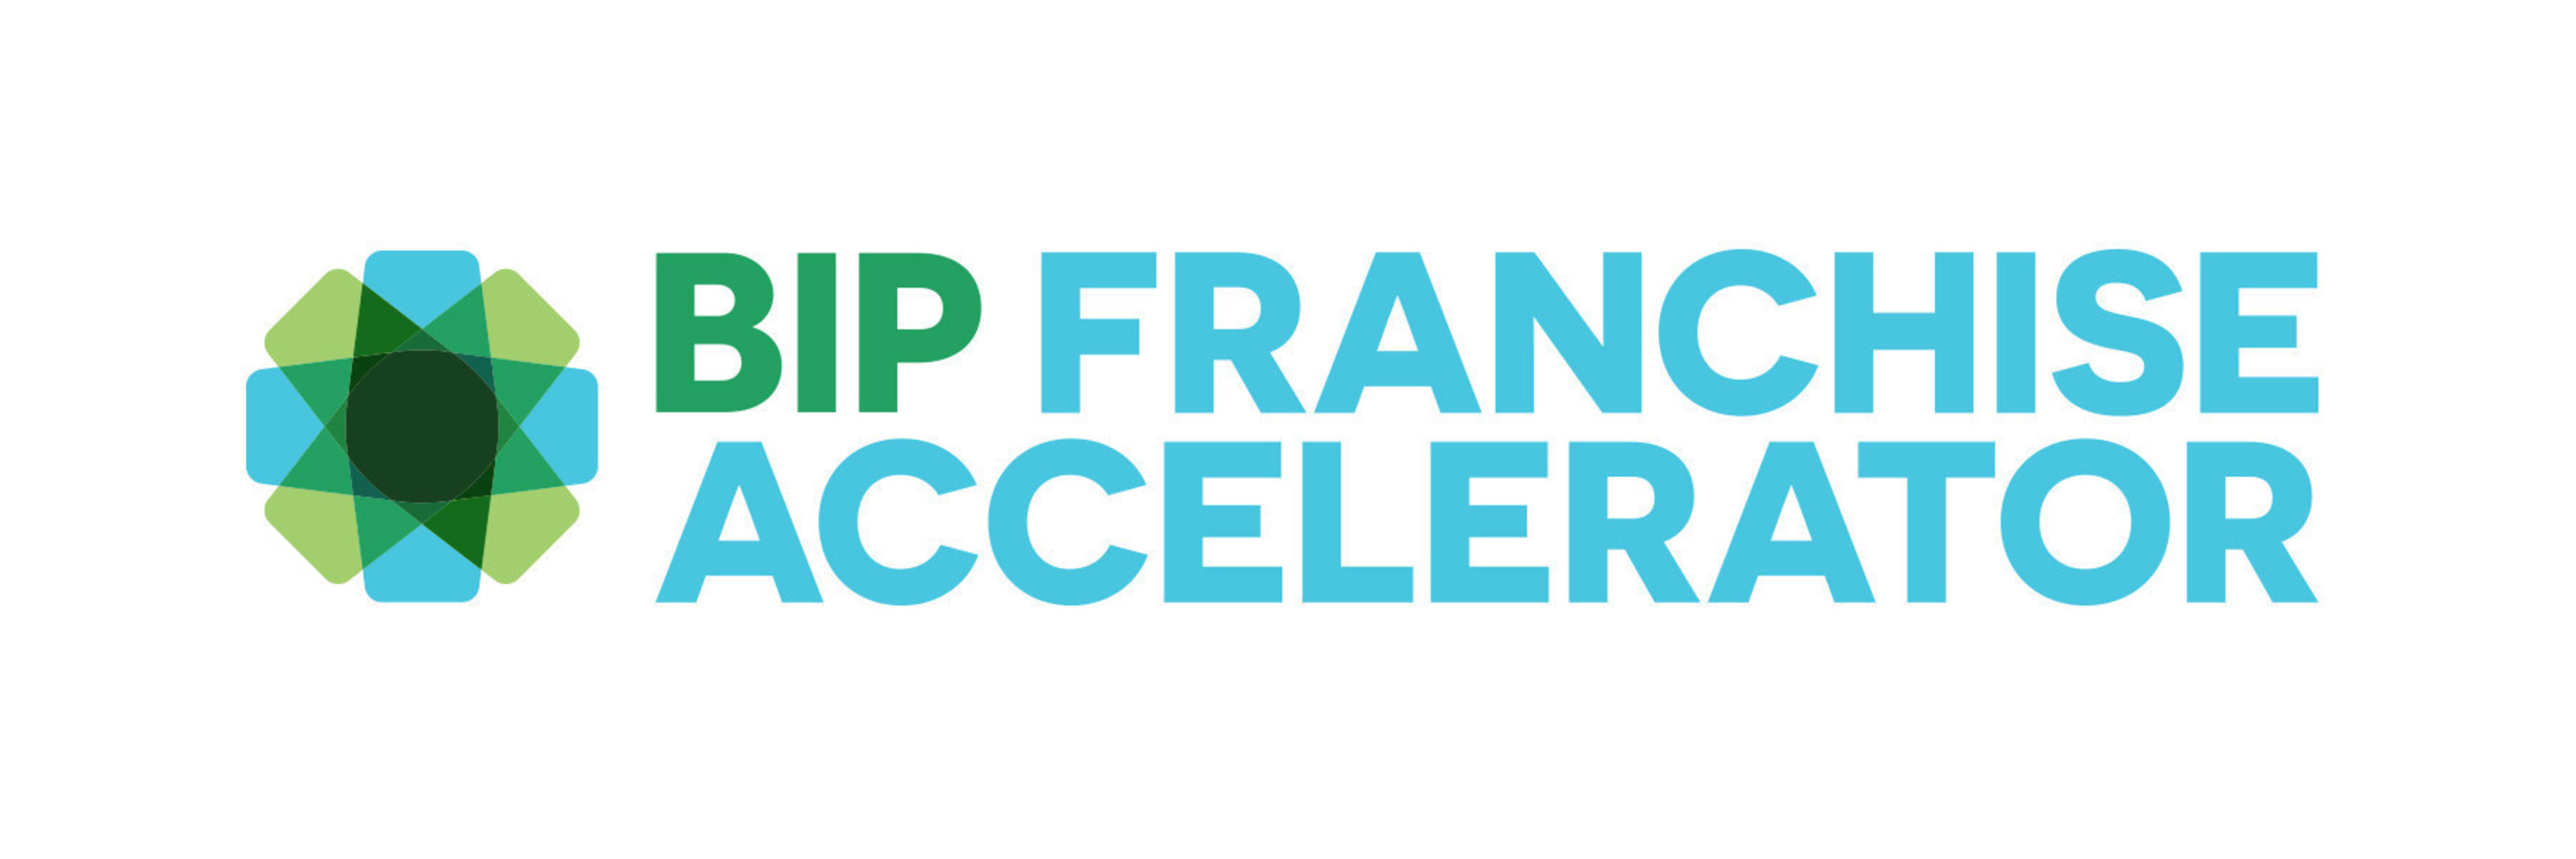 BIP Franchise Accelerator logo